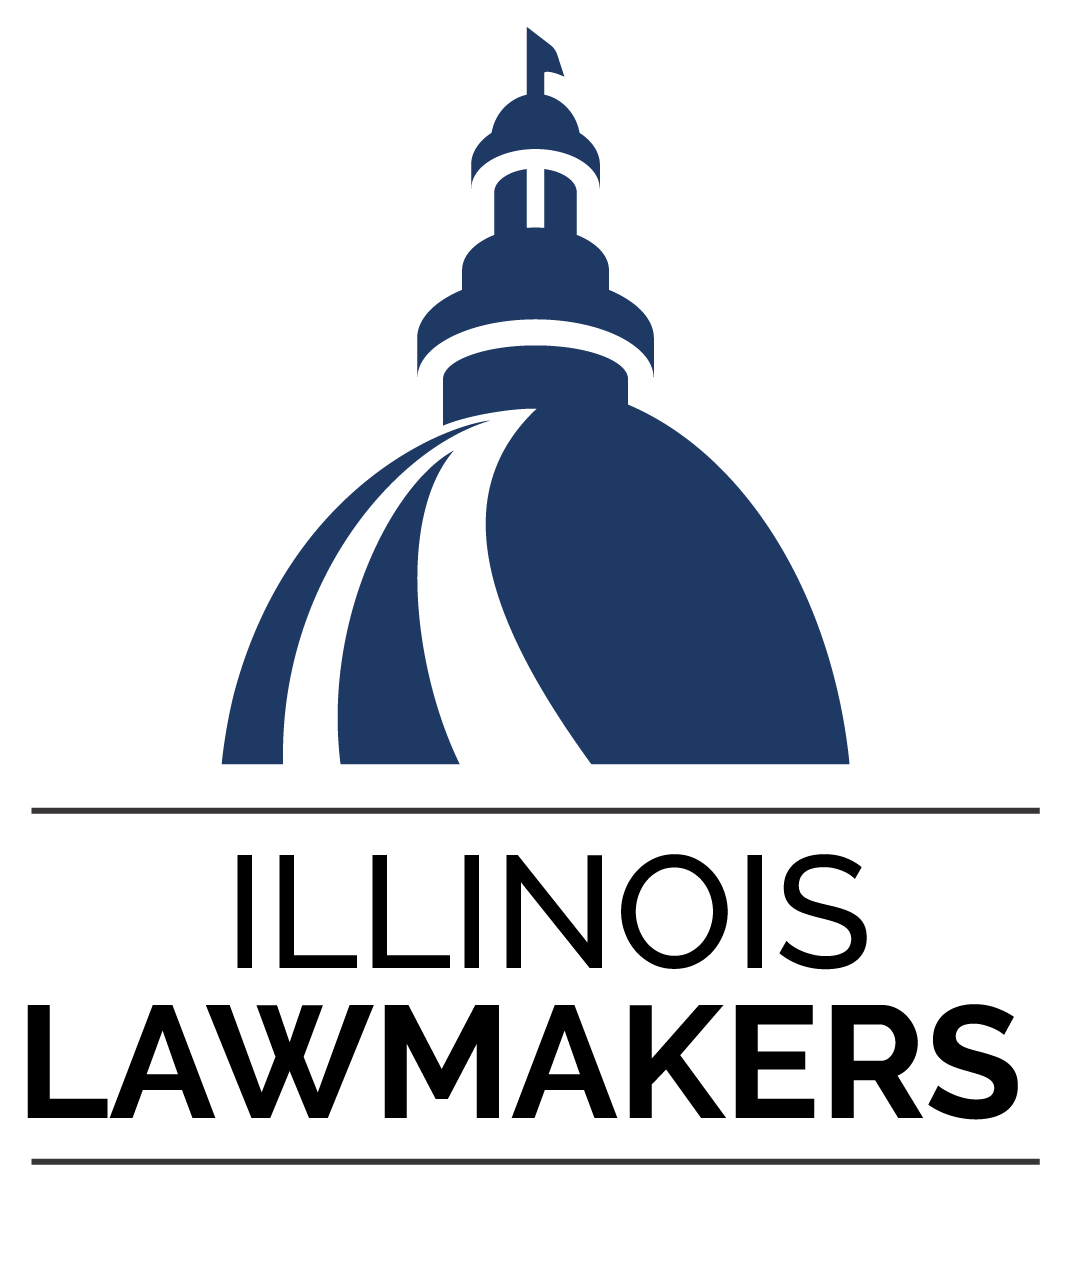 lawmaker logo